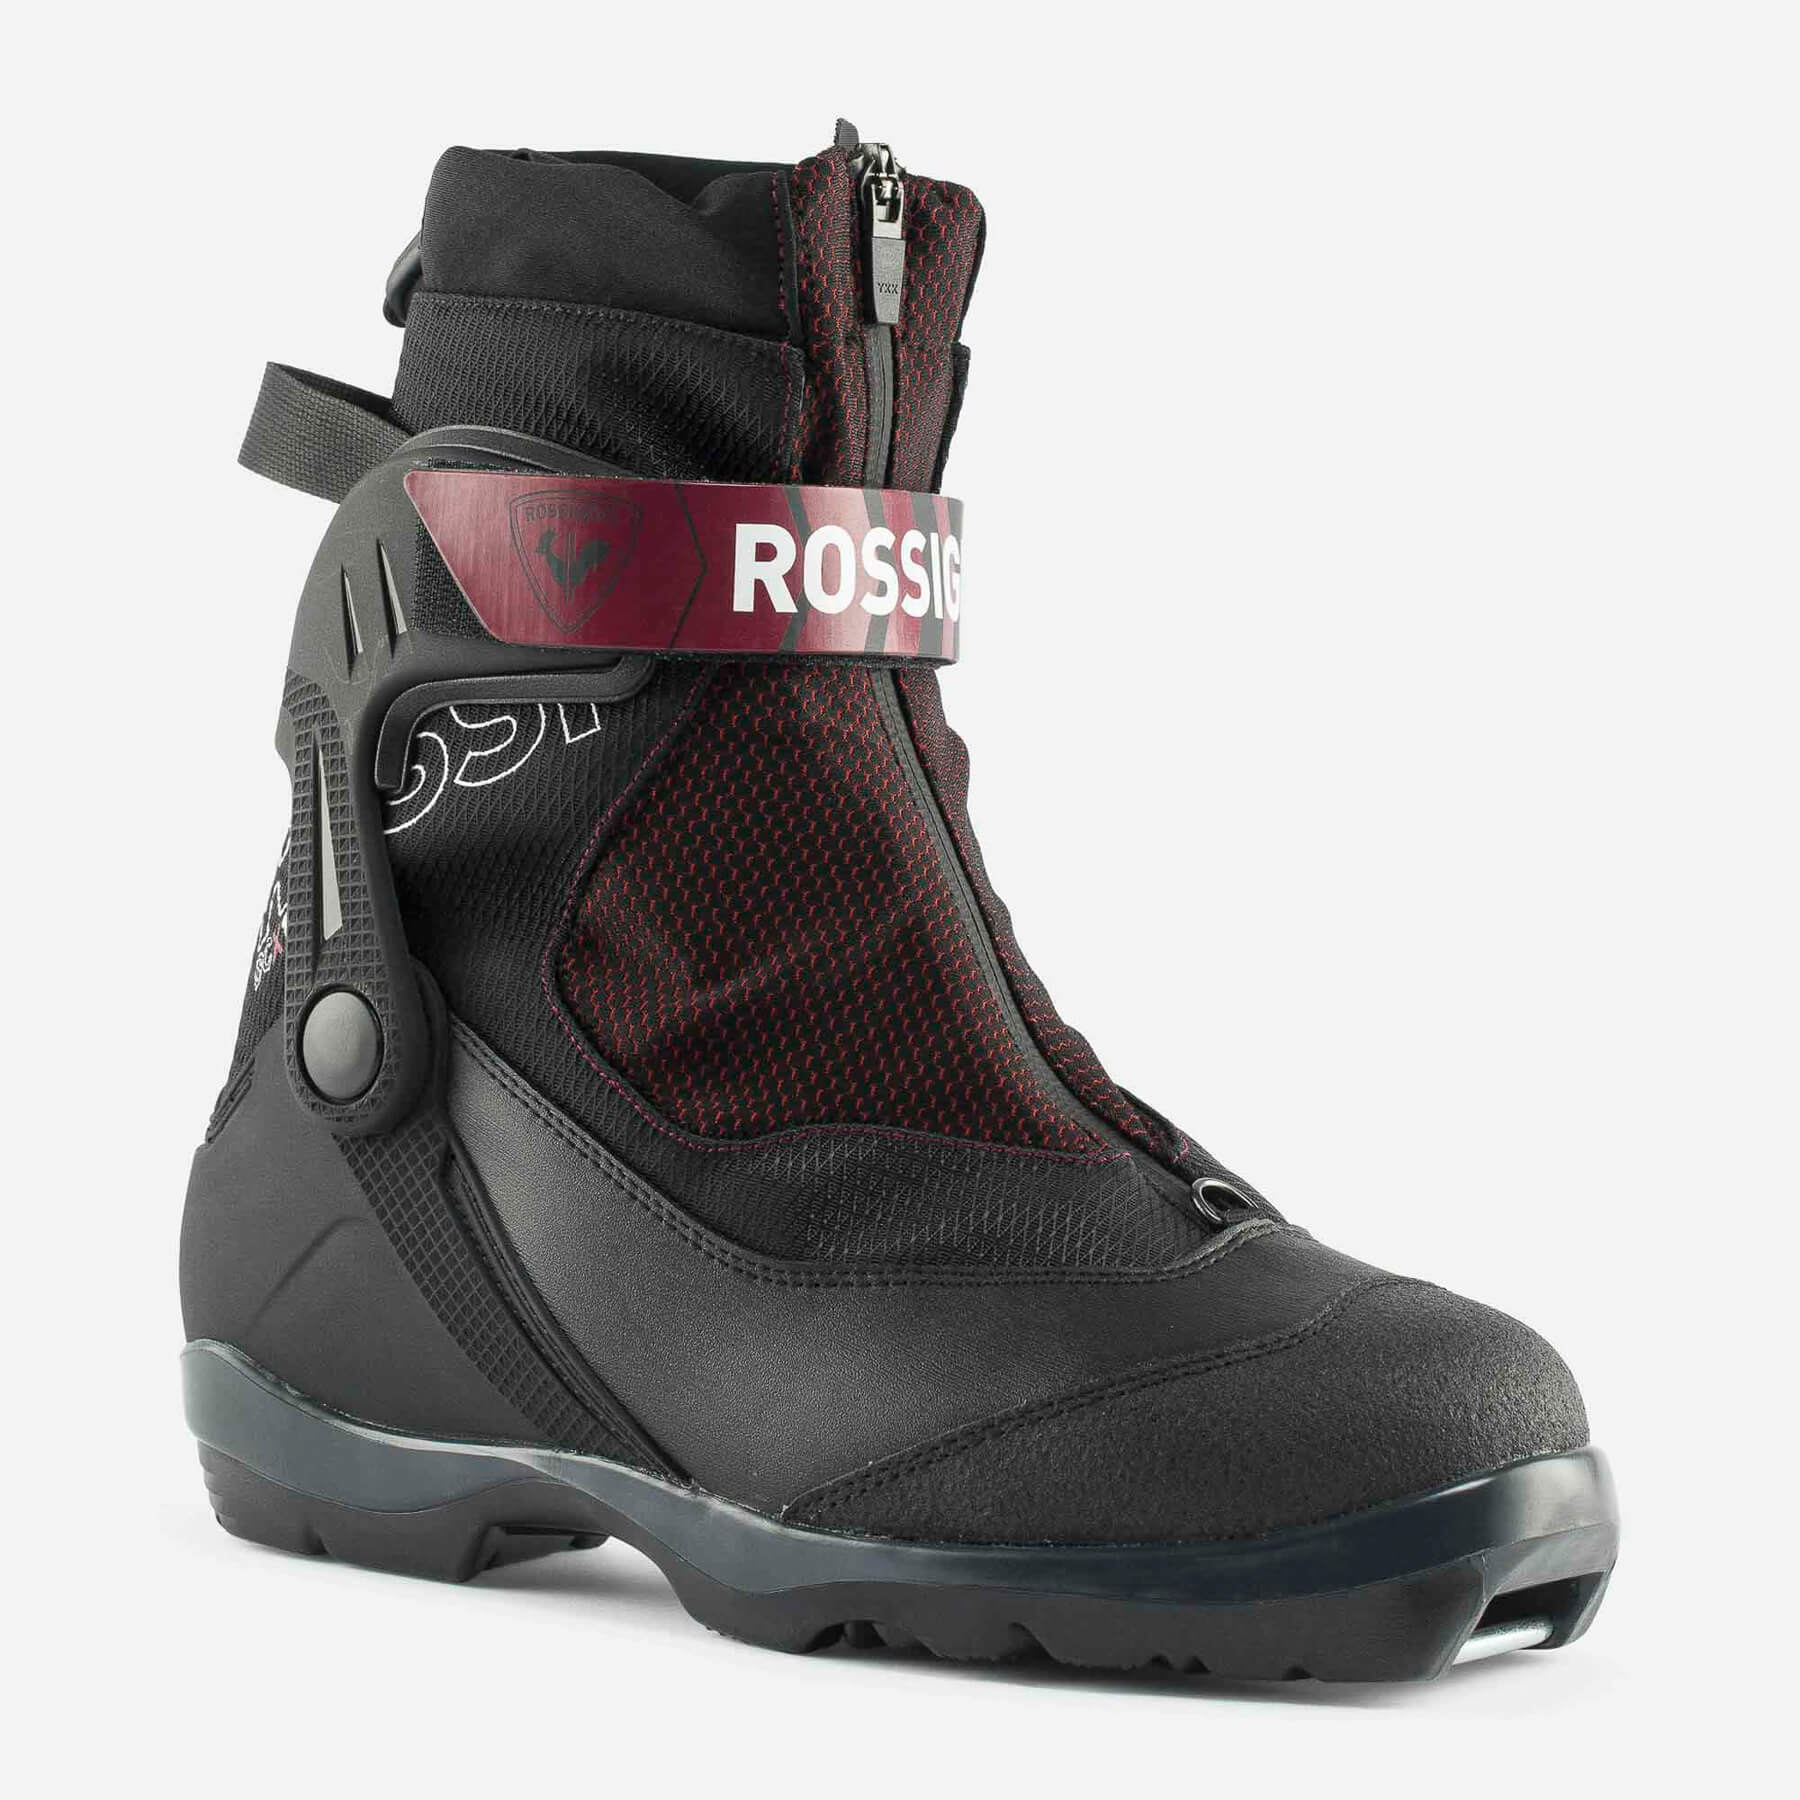 Rossignol BC X 10 BC Boot